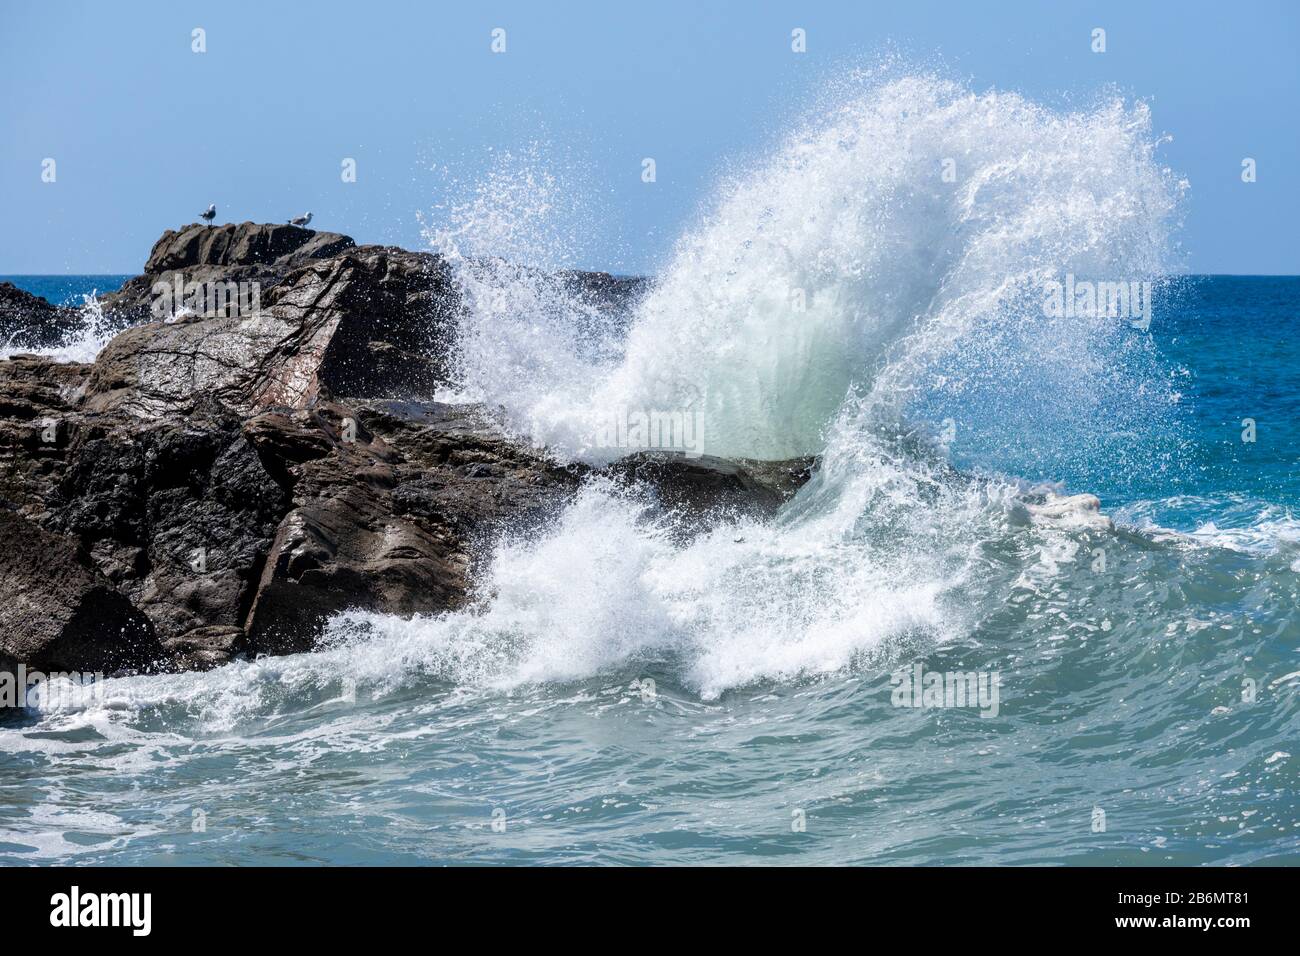 Heavy Atlantic seas with large waves crashing onto rocks on the beach at Ajuy on the Canary Island of Fuerteventura Stock Photo